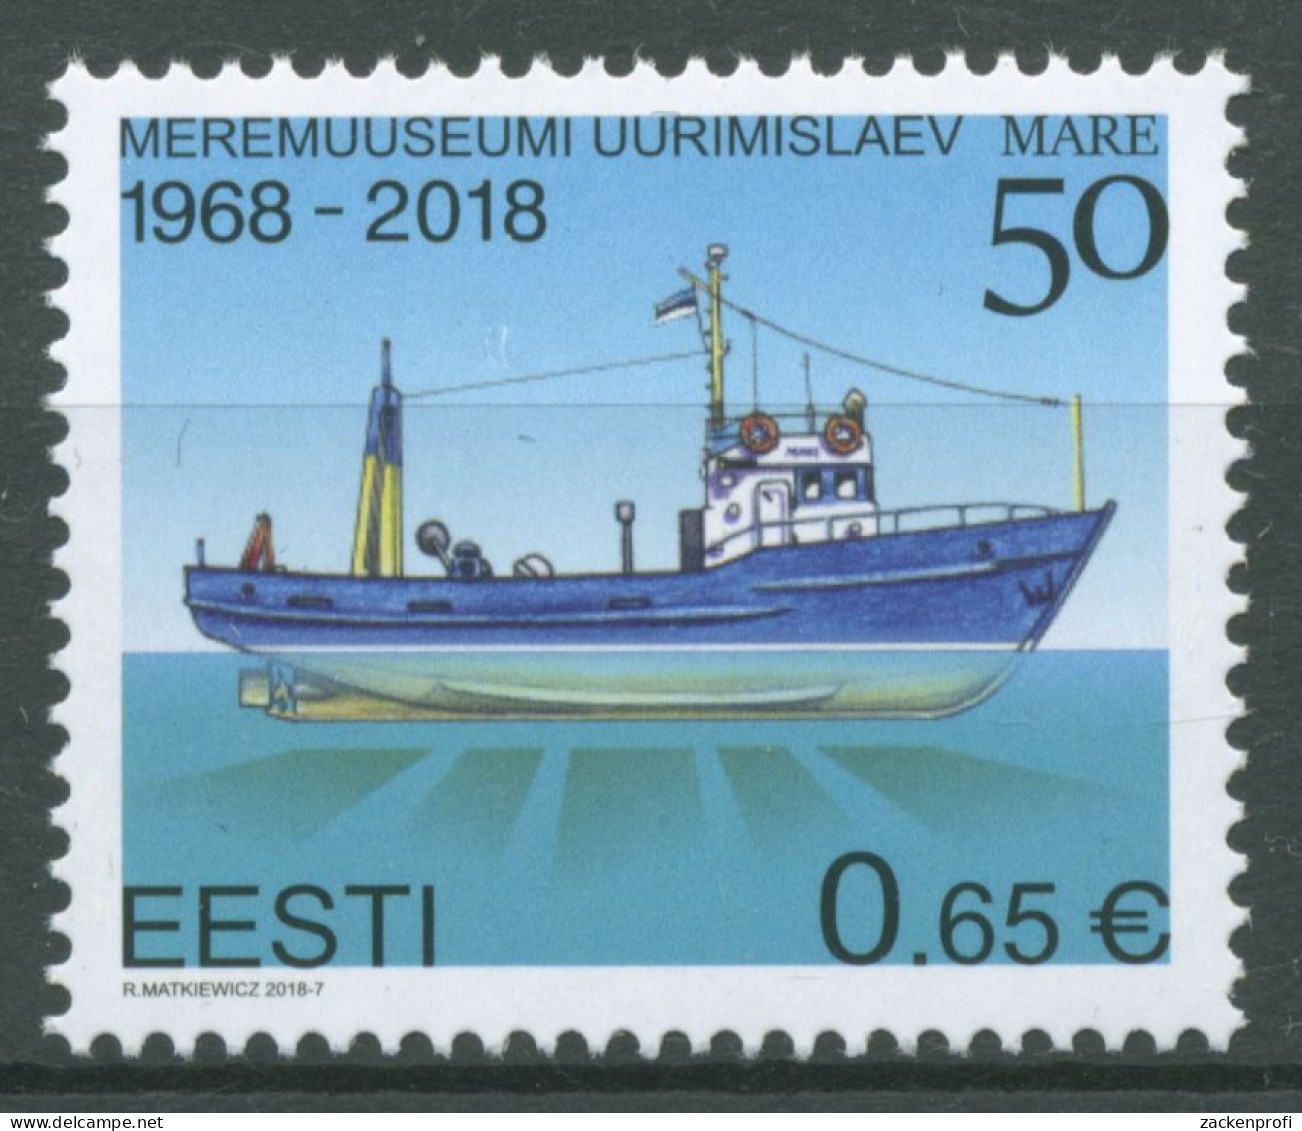 Estland 2018 Meeresmuseum Forschungsschiff Mare 917 Postfrisch - Estonia